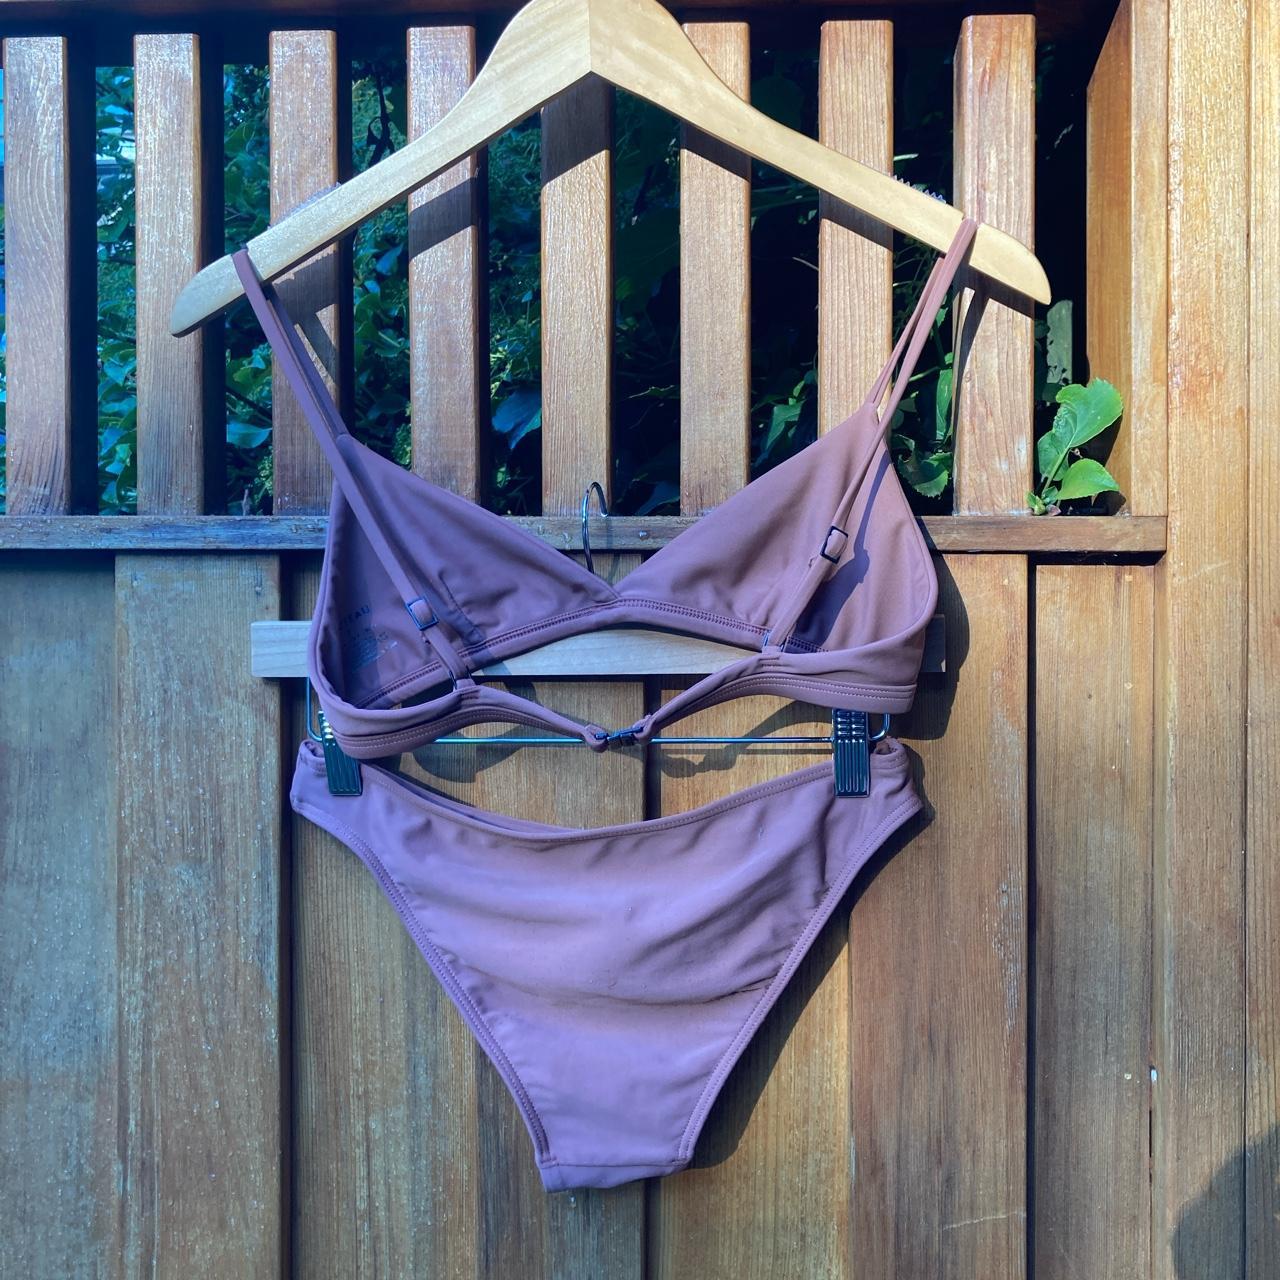 Product Image 4 - Repop Matteau bikini. Aus size